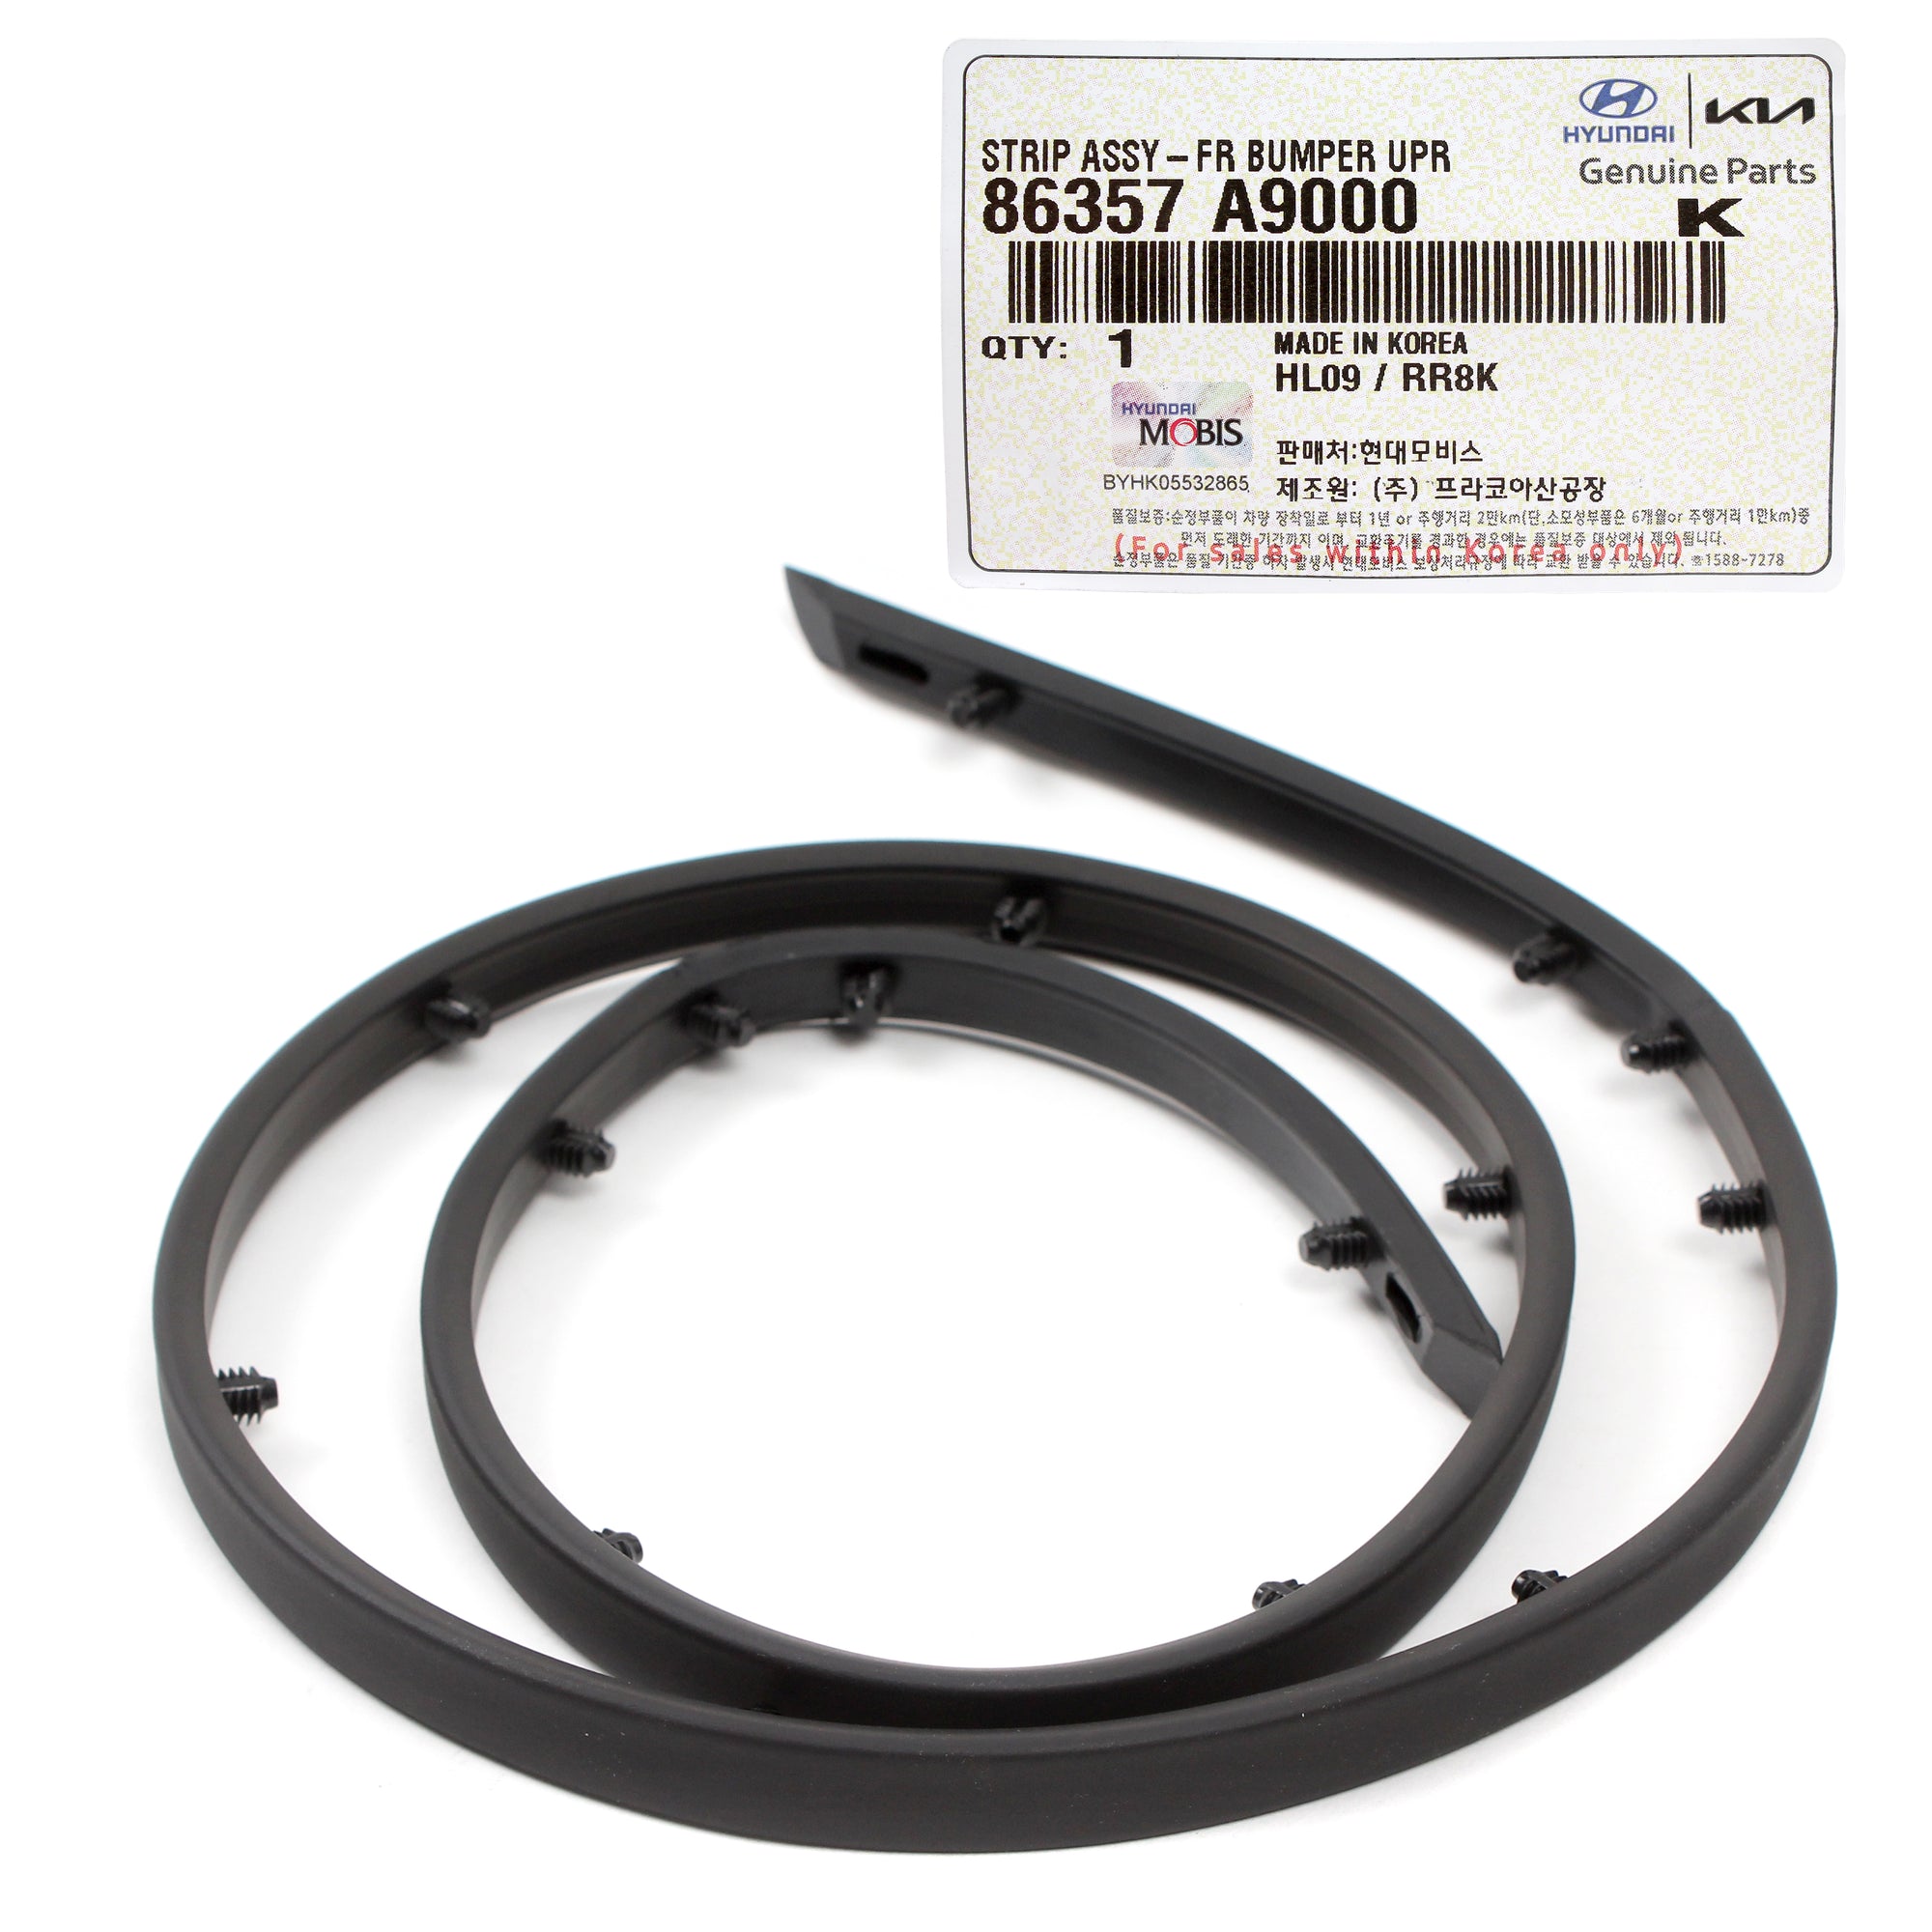 GENUINE Front Bumper Hood Upper Rubber Seal for 2015-21 Kia Sedona 86357A9000